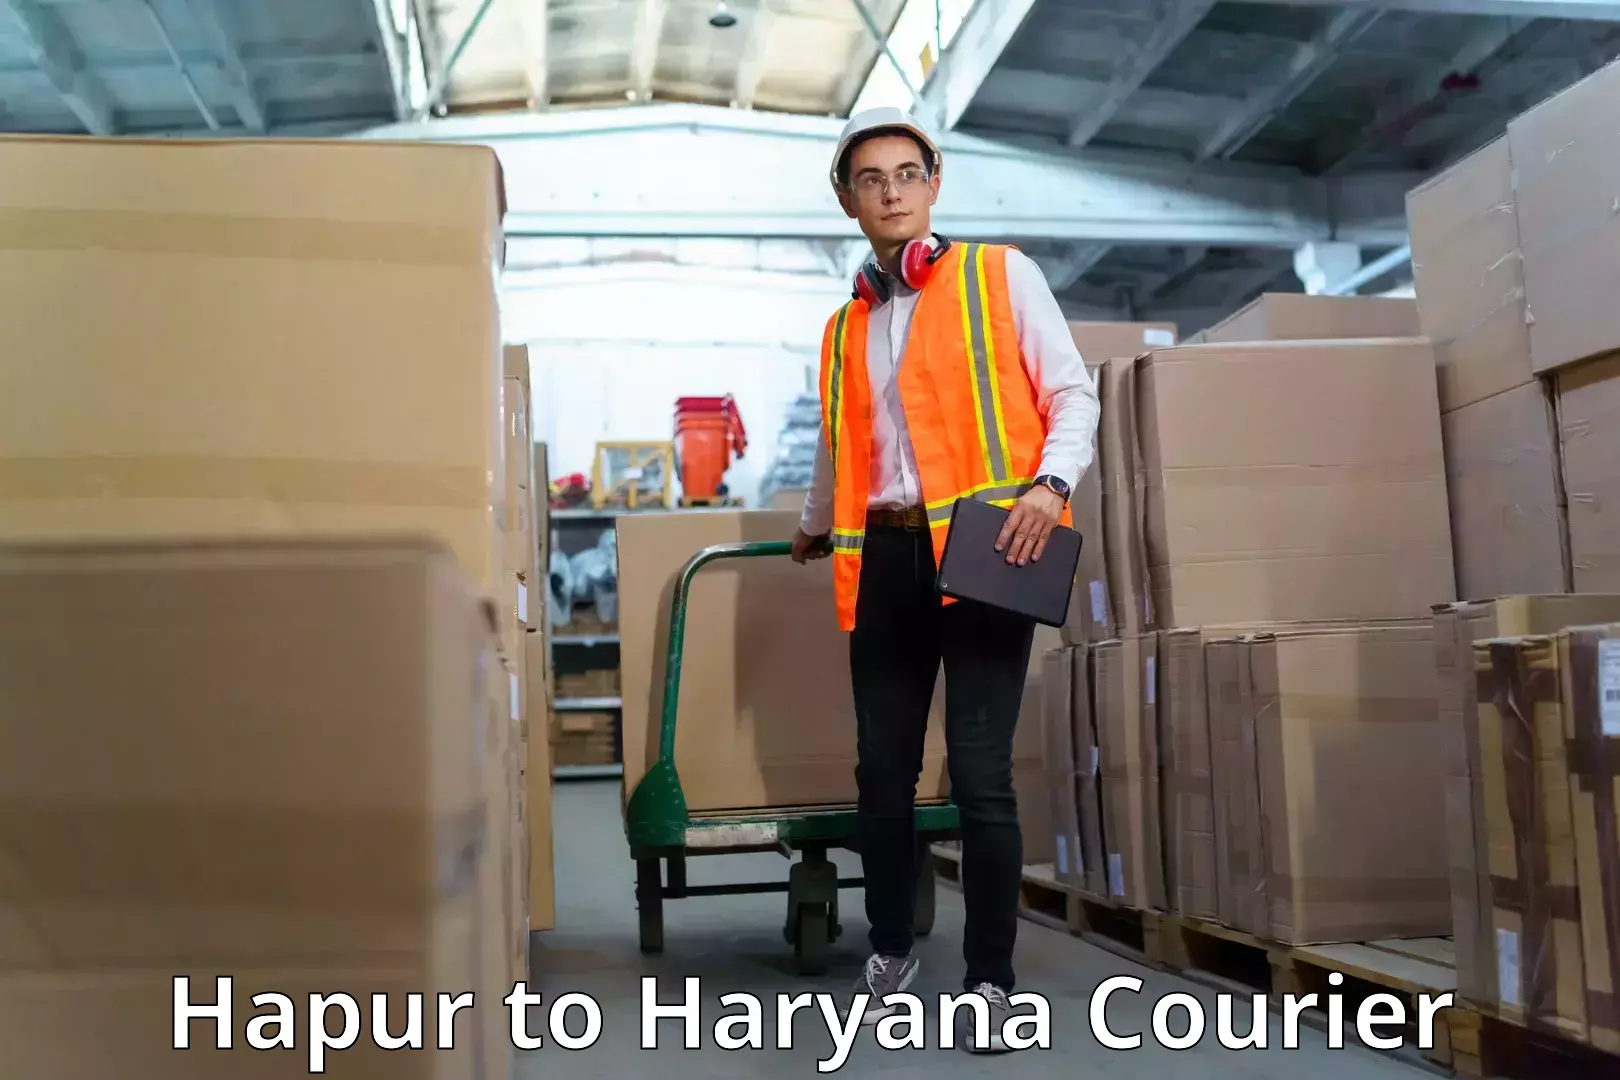 Courier service comparison Hapur to Haryana